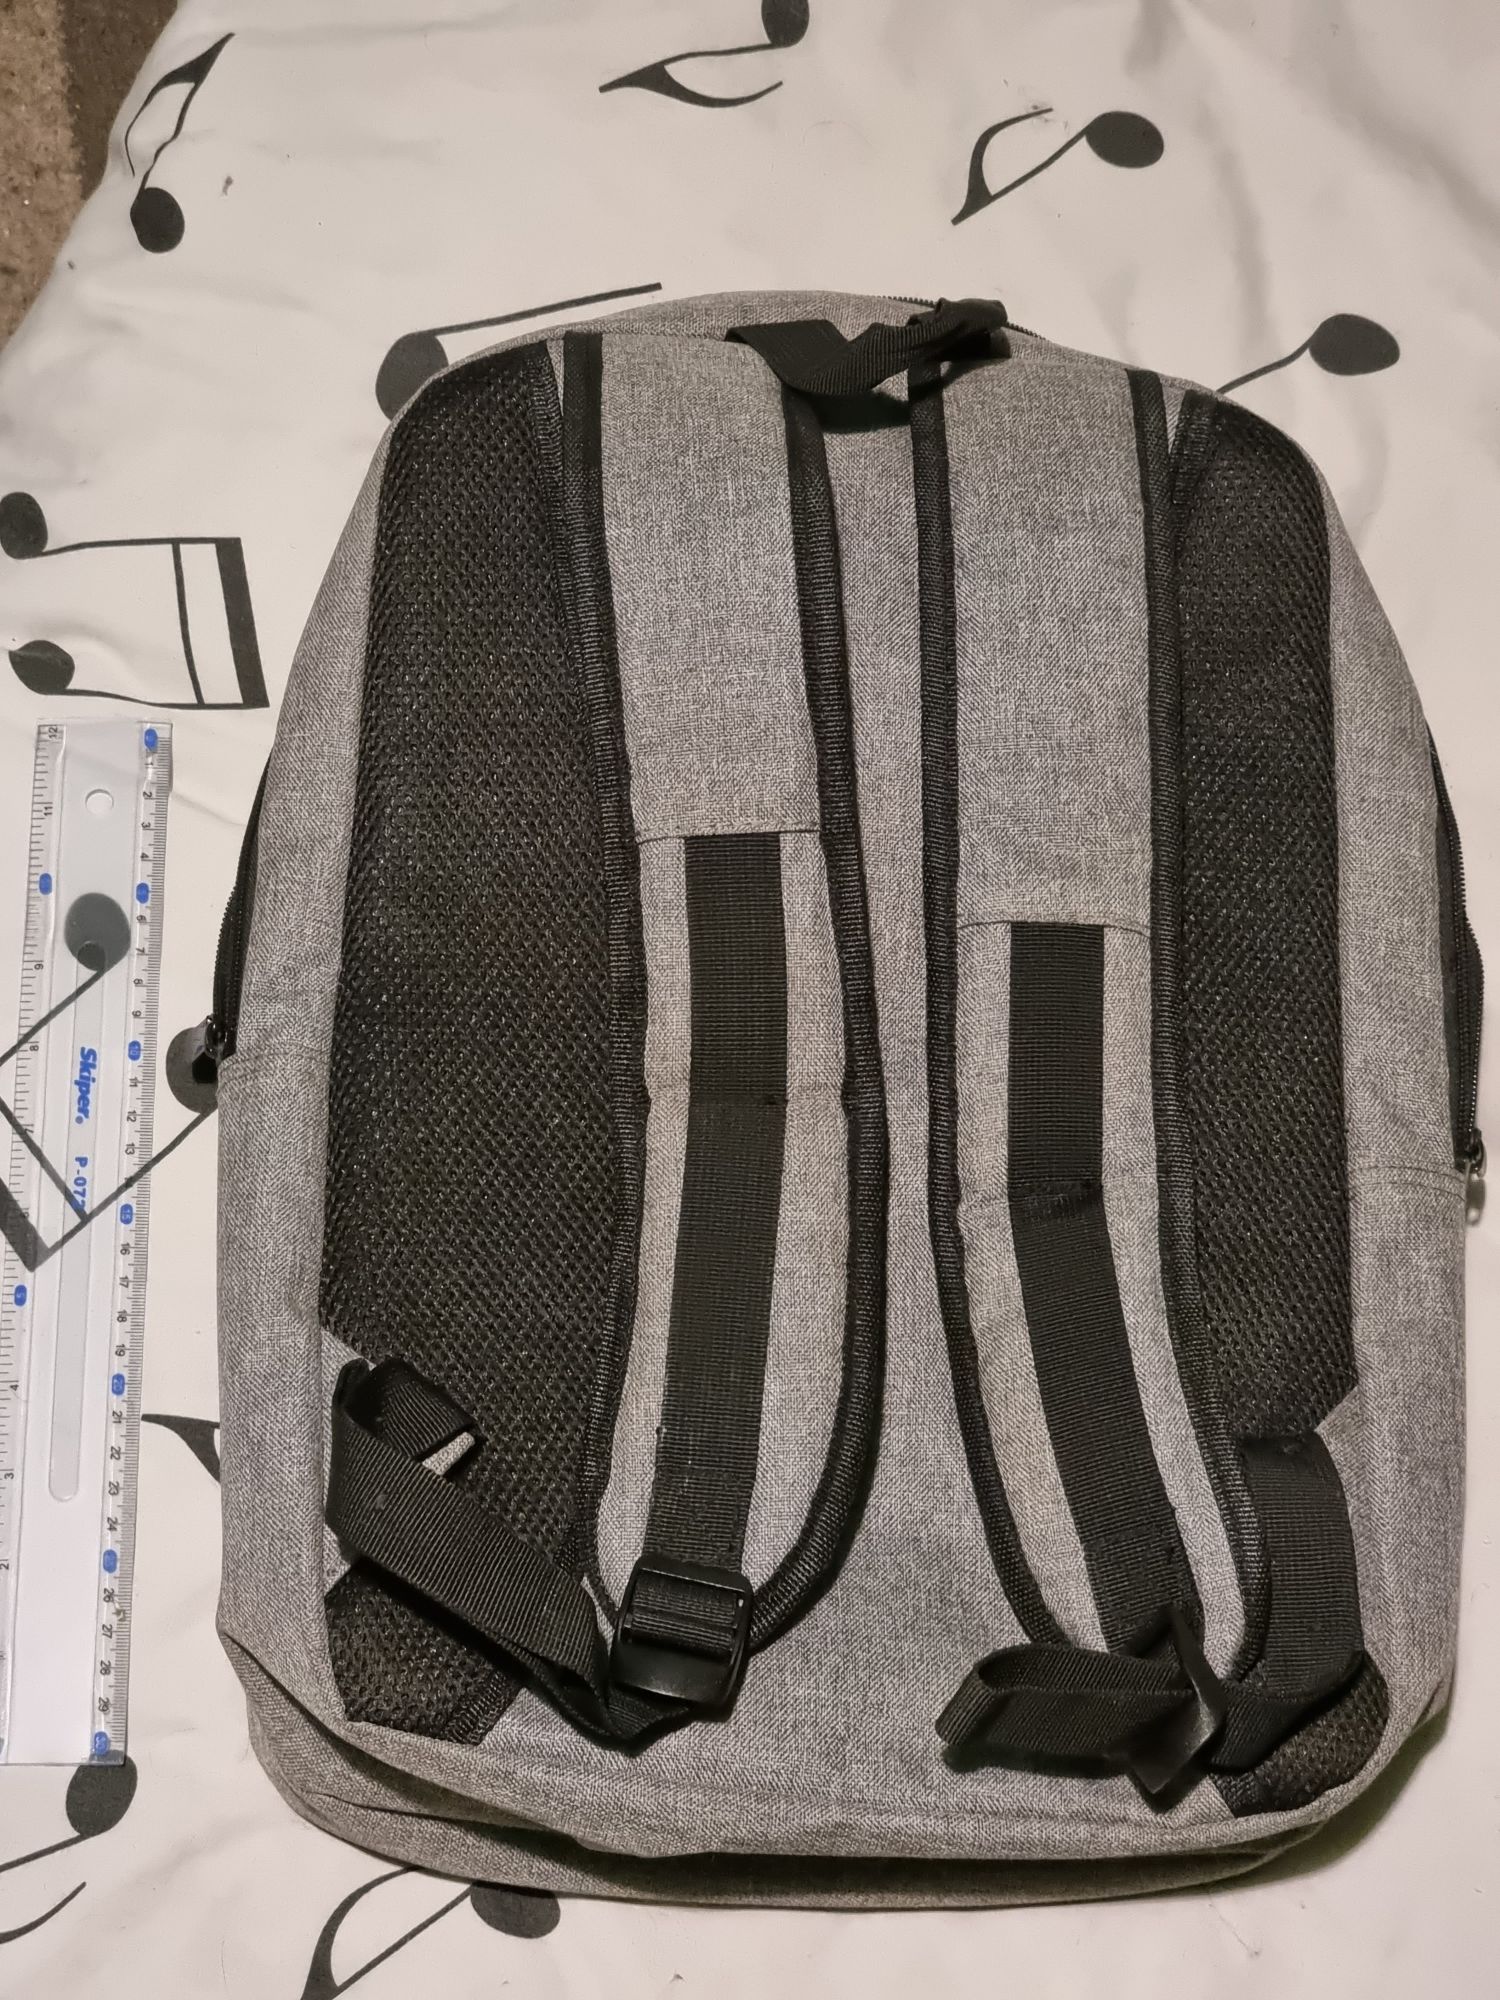 Рюкзак для ноутбука 15" Devico серый Modul